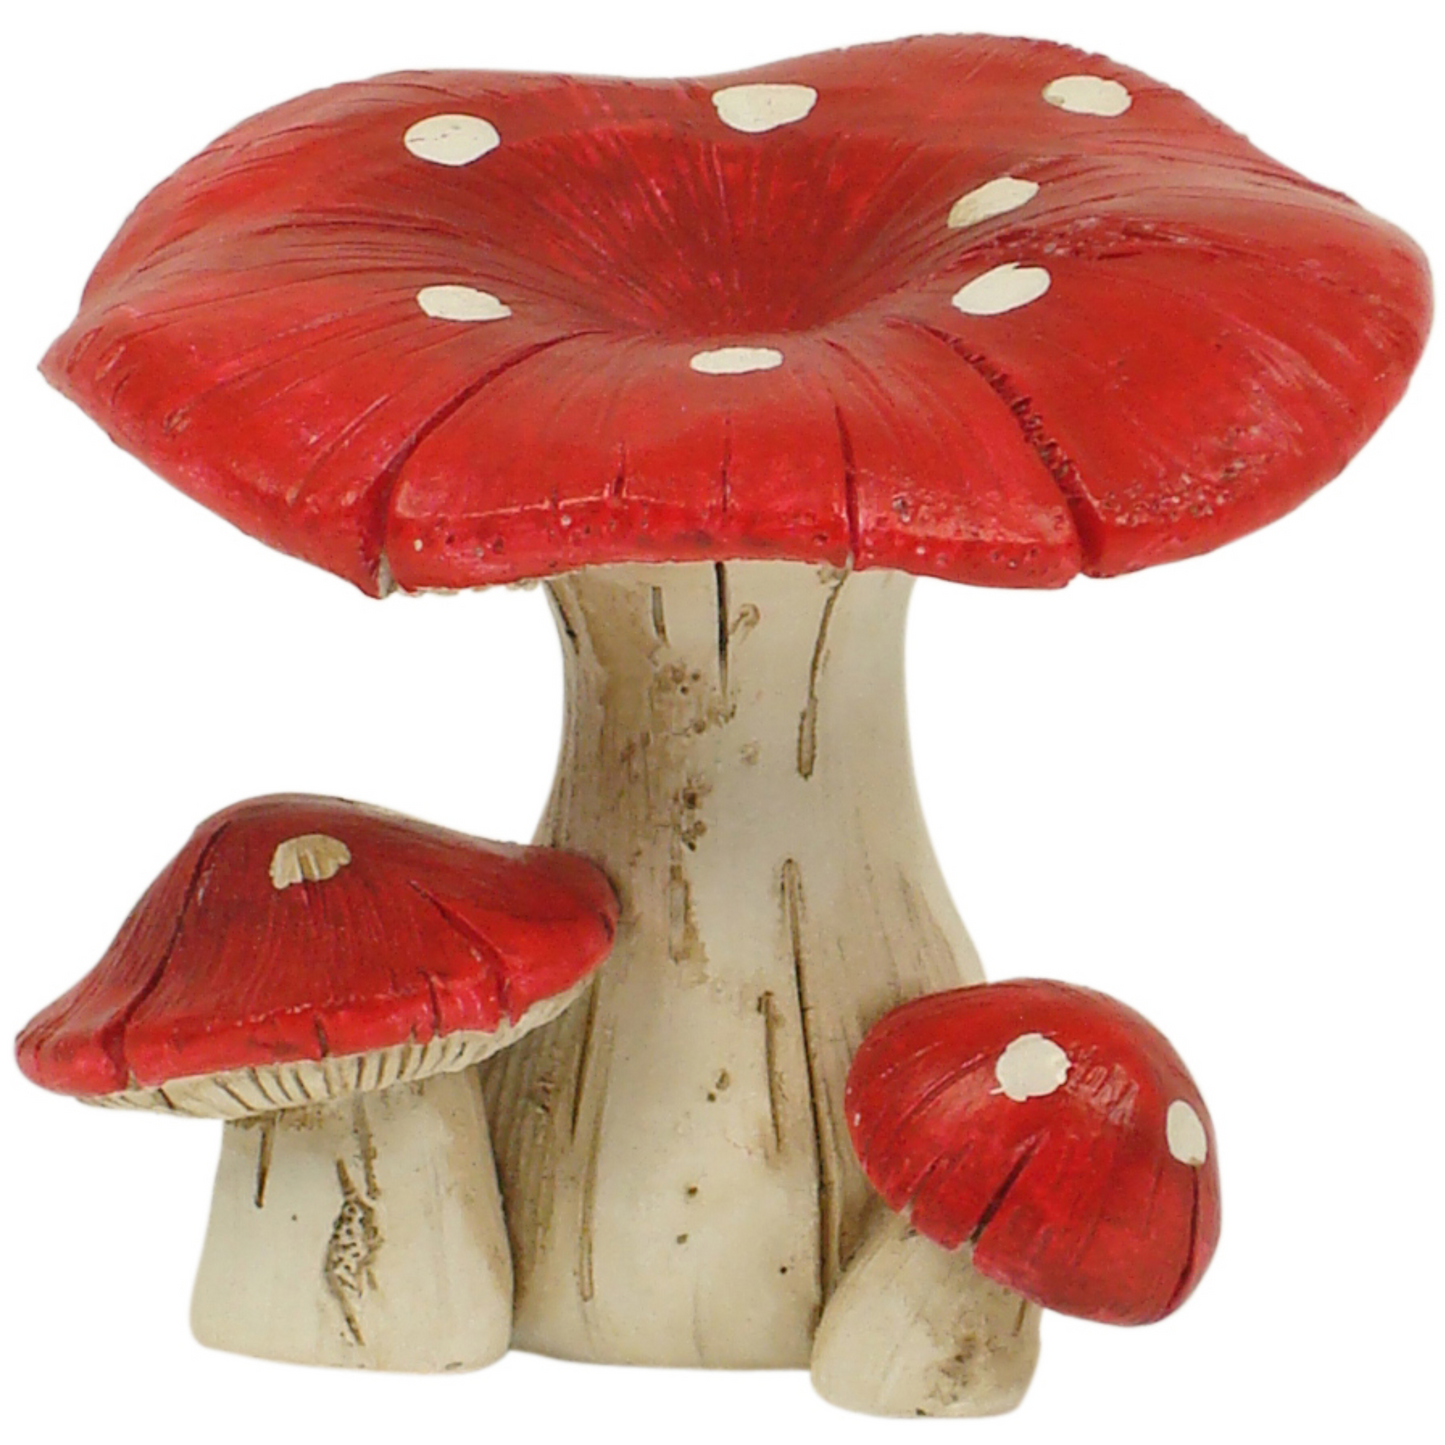 Mushrooms Red